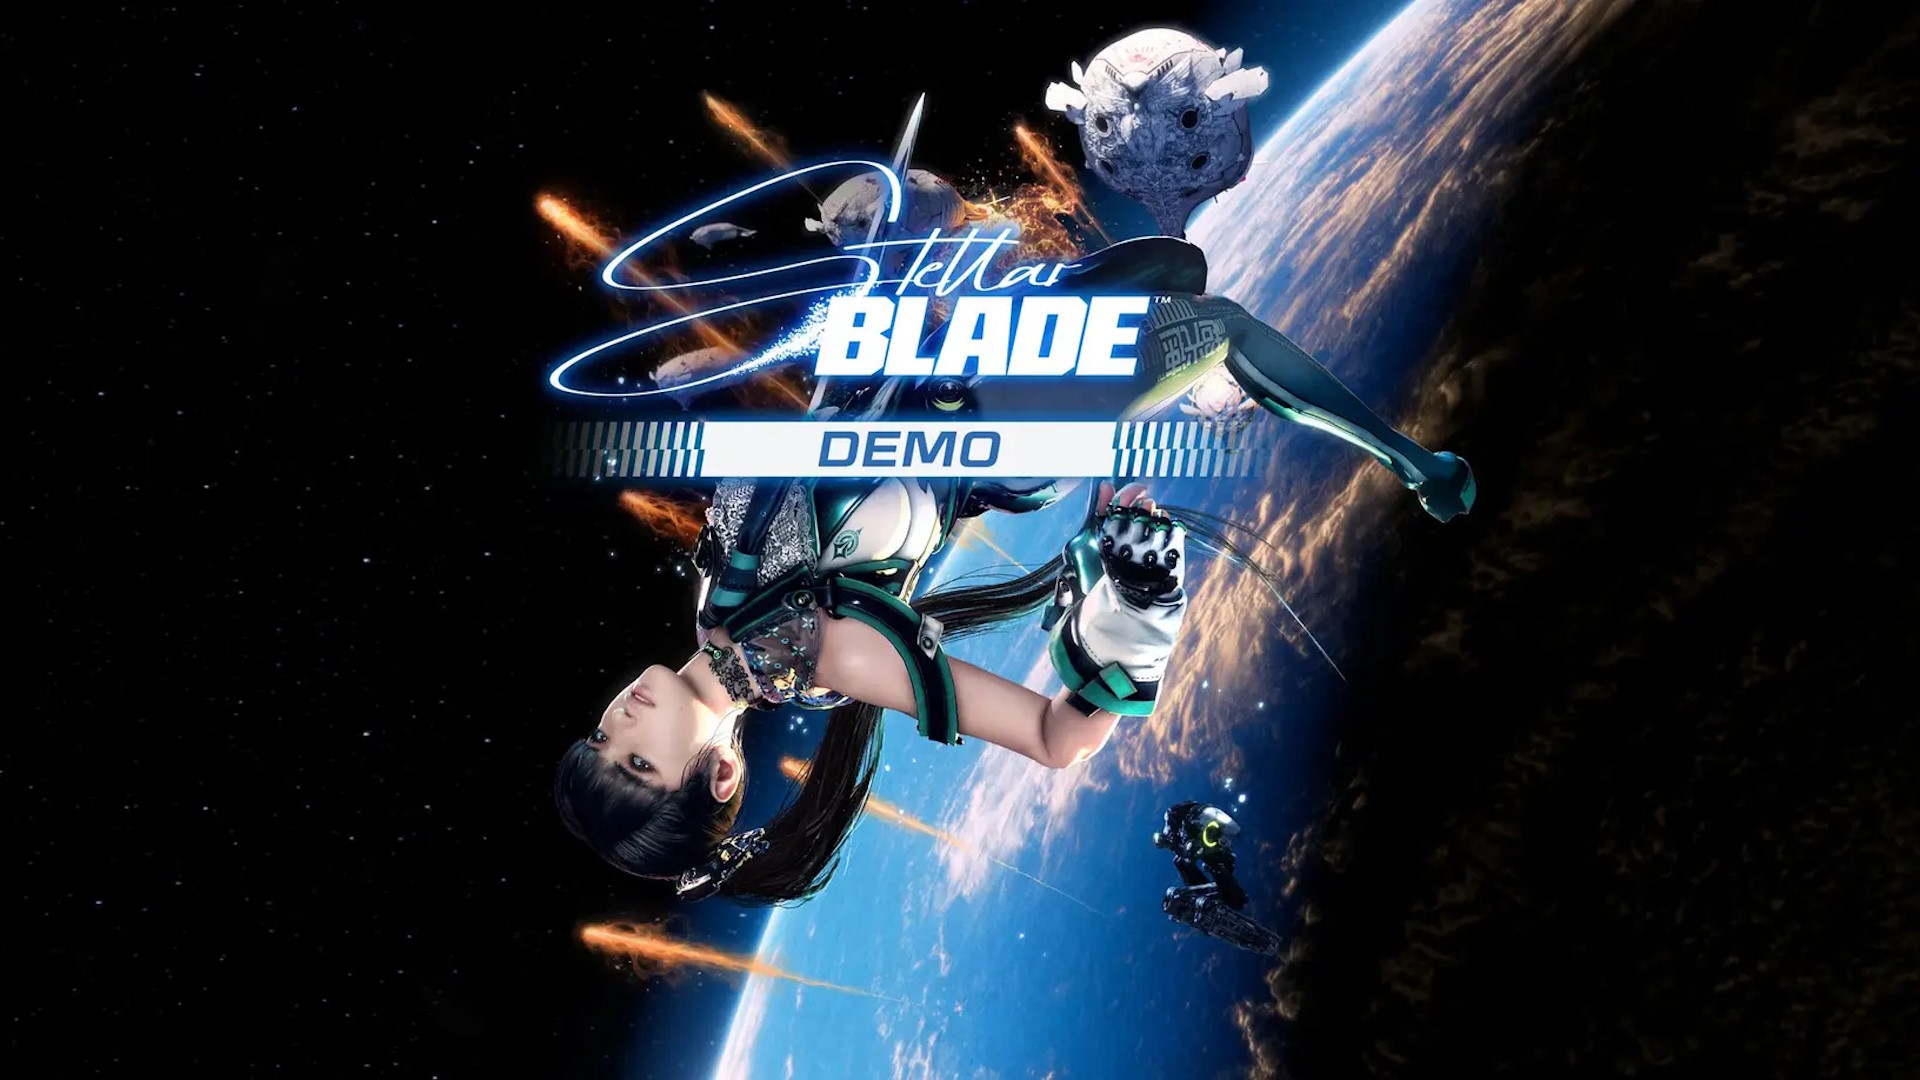  Stellar Blade demo coming March 29